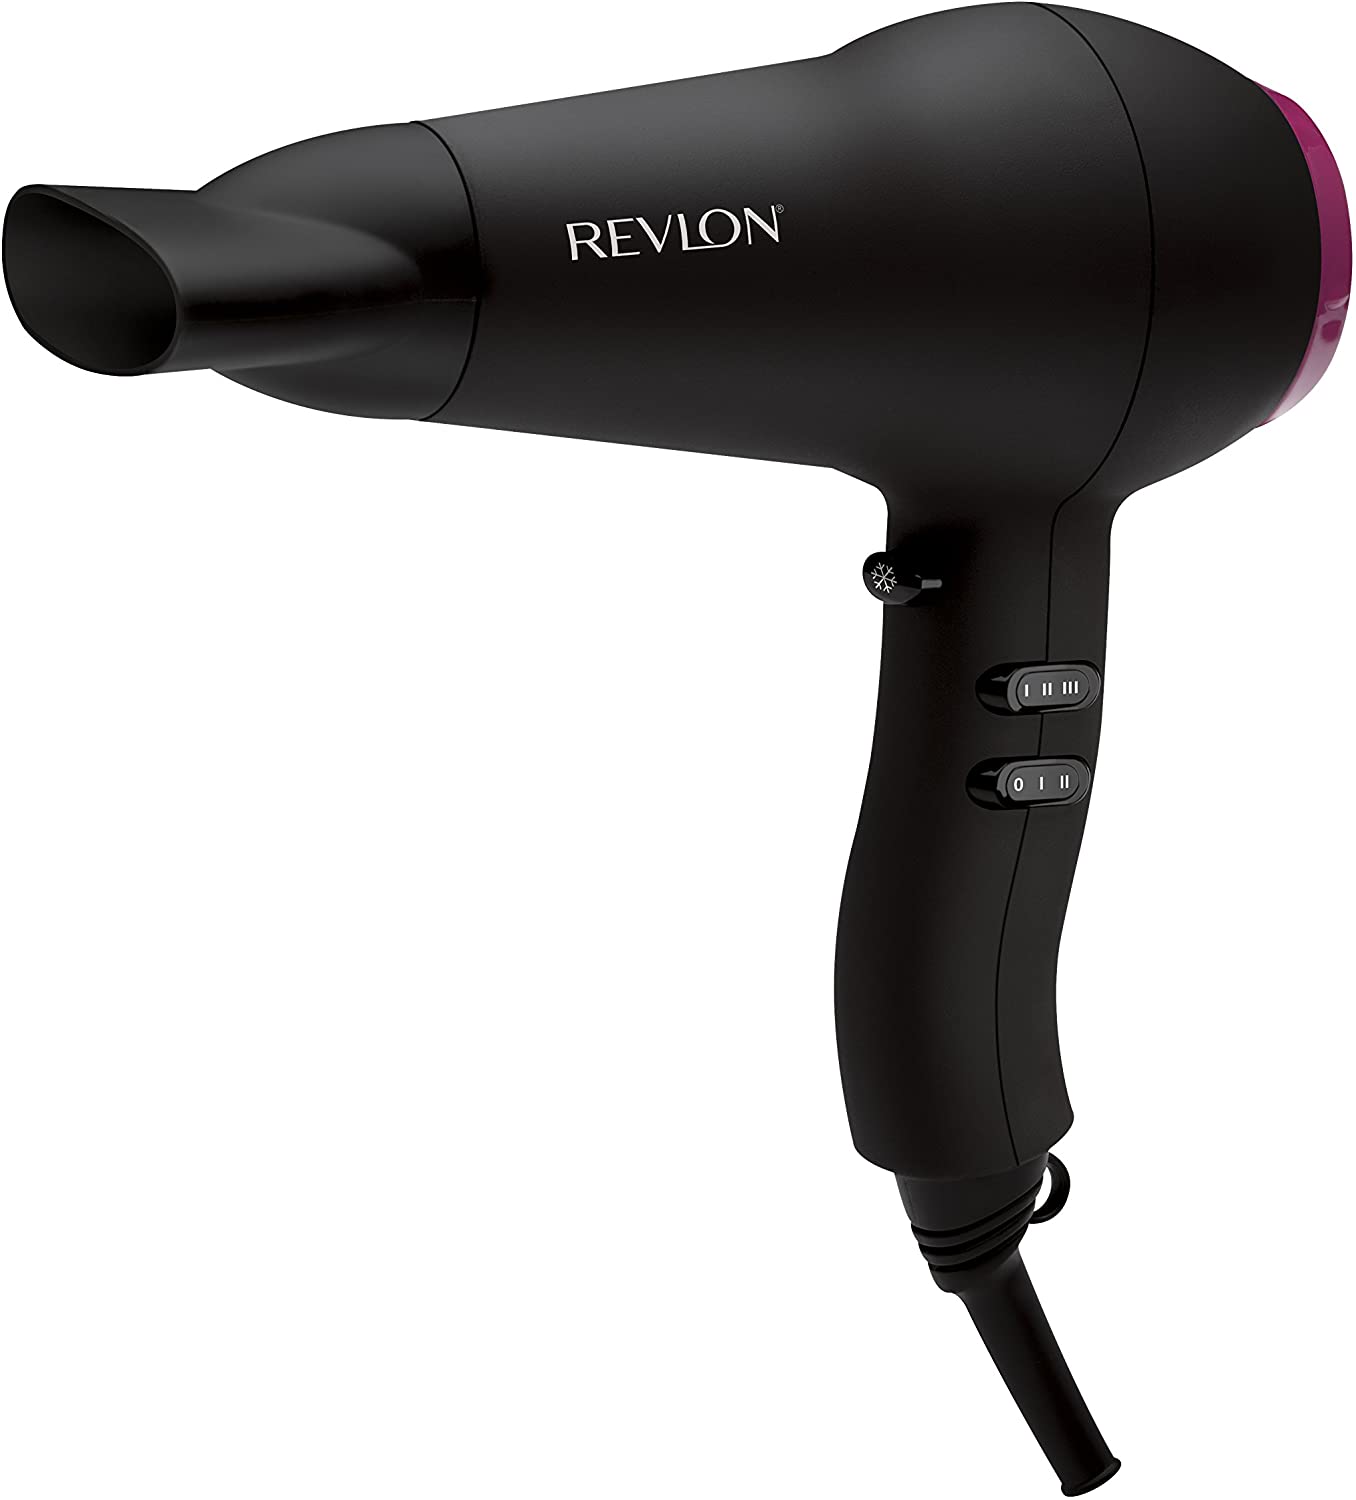 Revlon 2000 W Compact Travel Hair Dryer